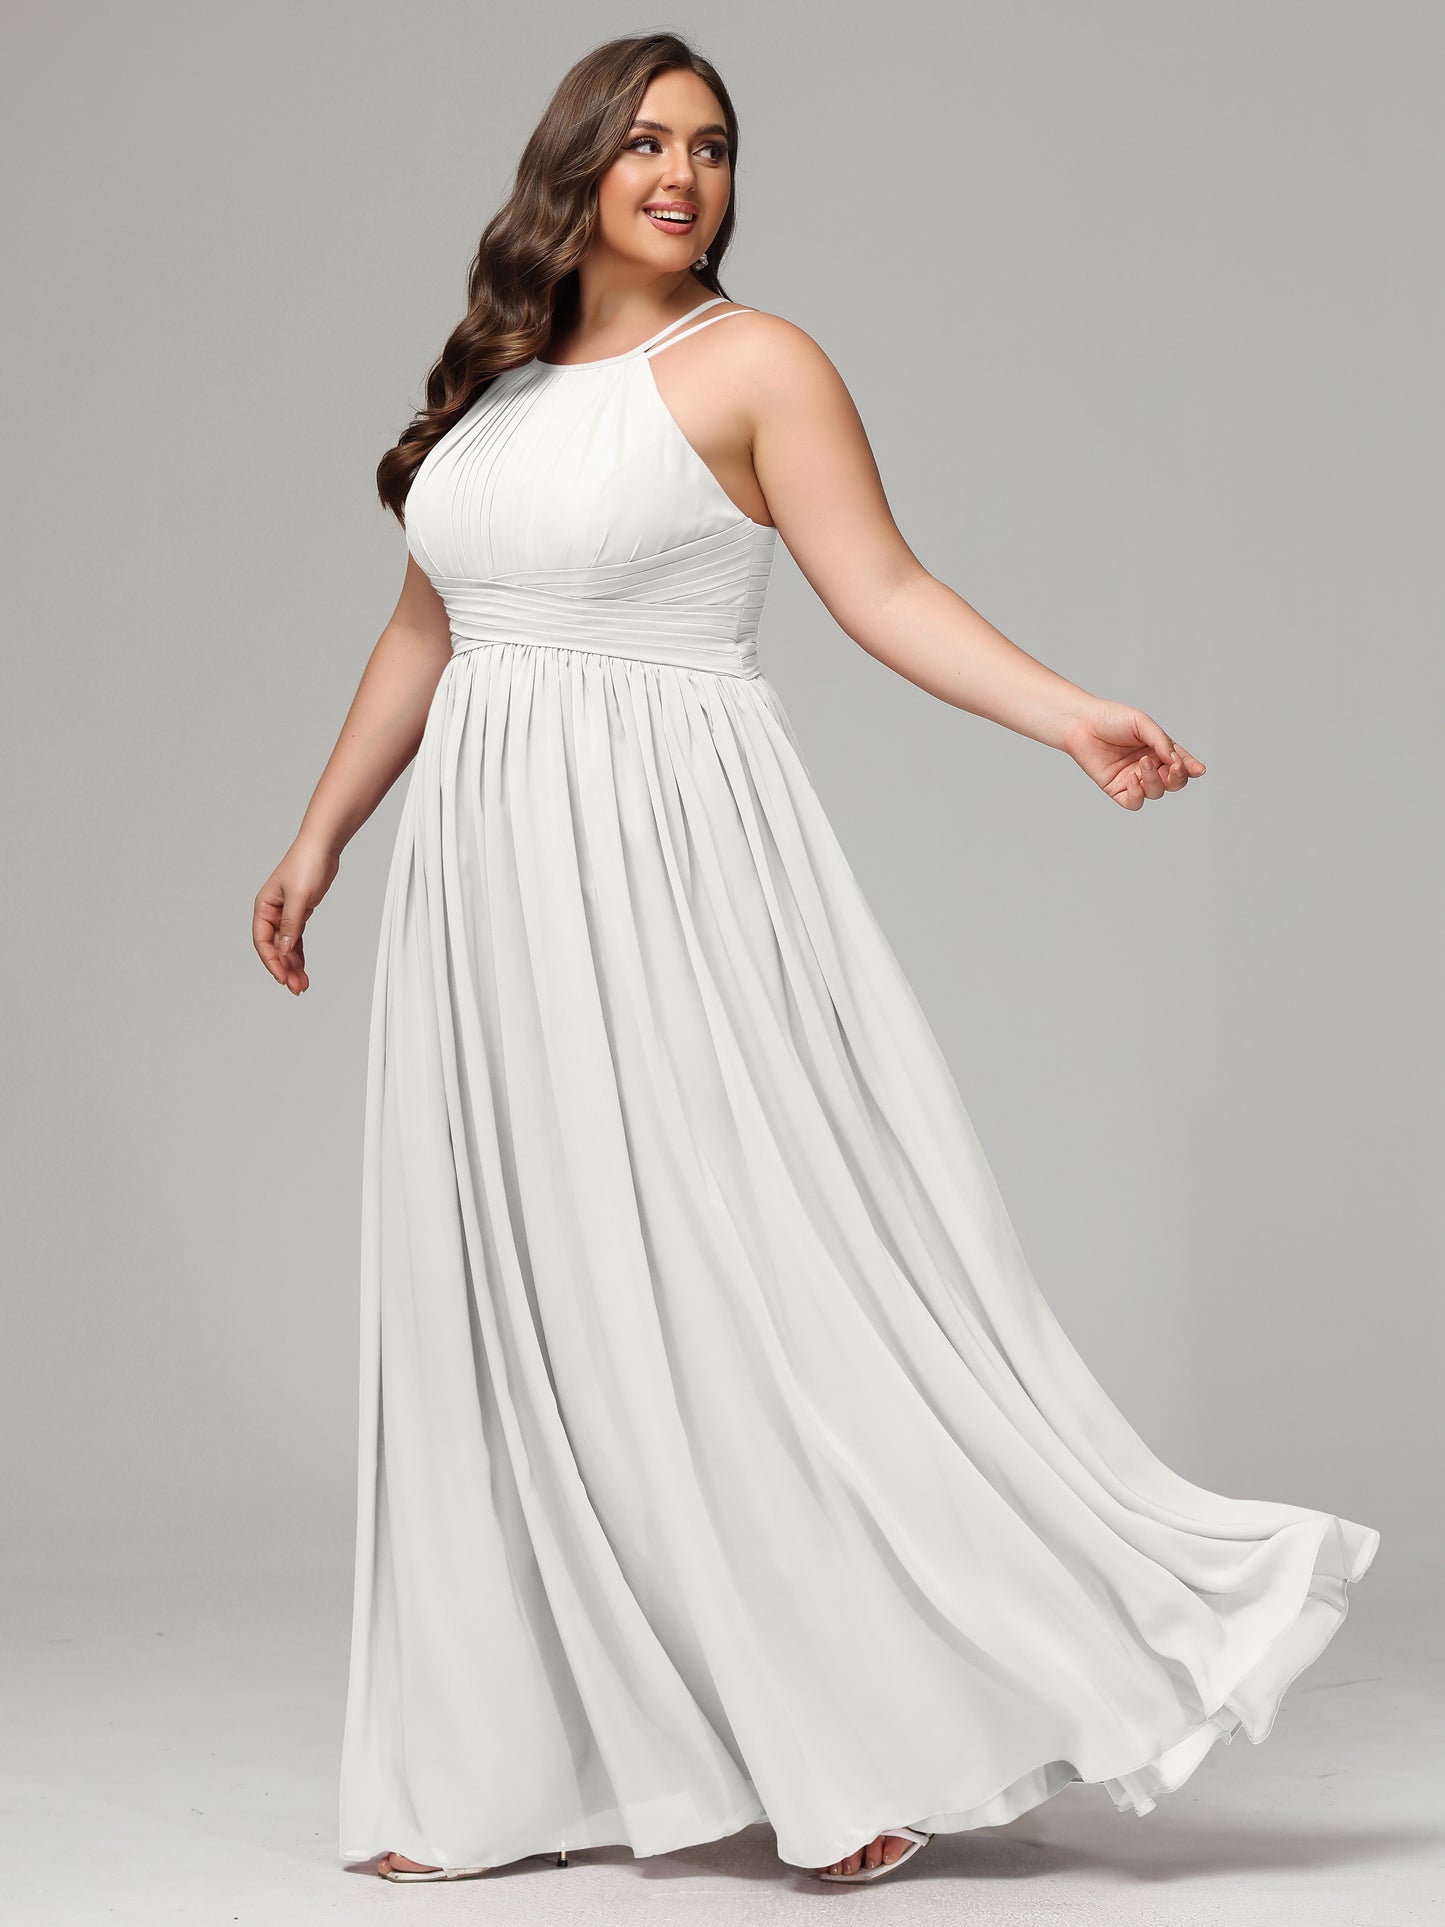 Halter & Straps on back Chiffon Bridesmaid Dress Plus Size